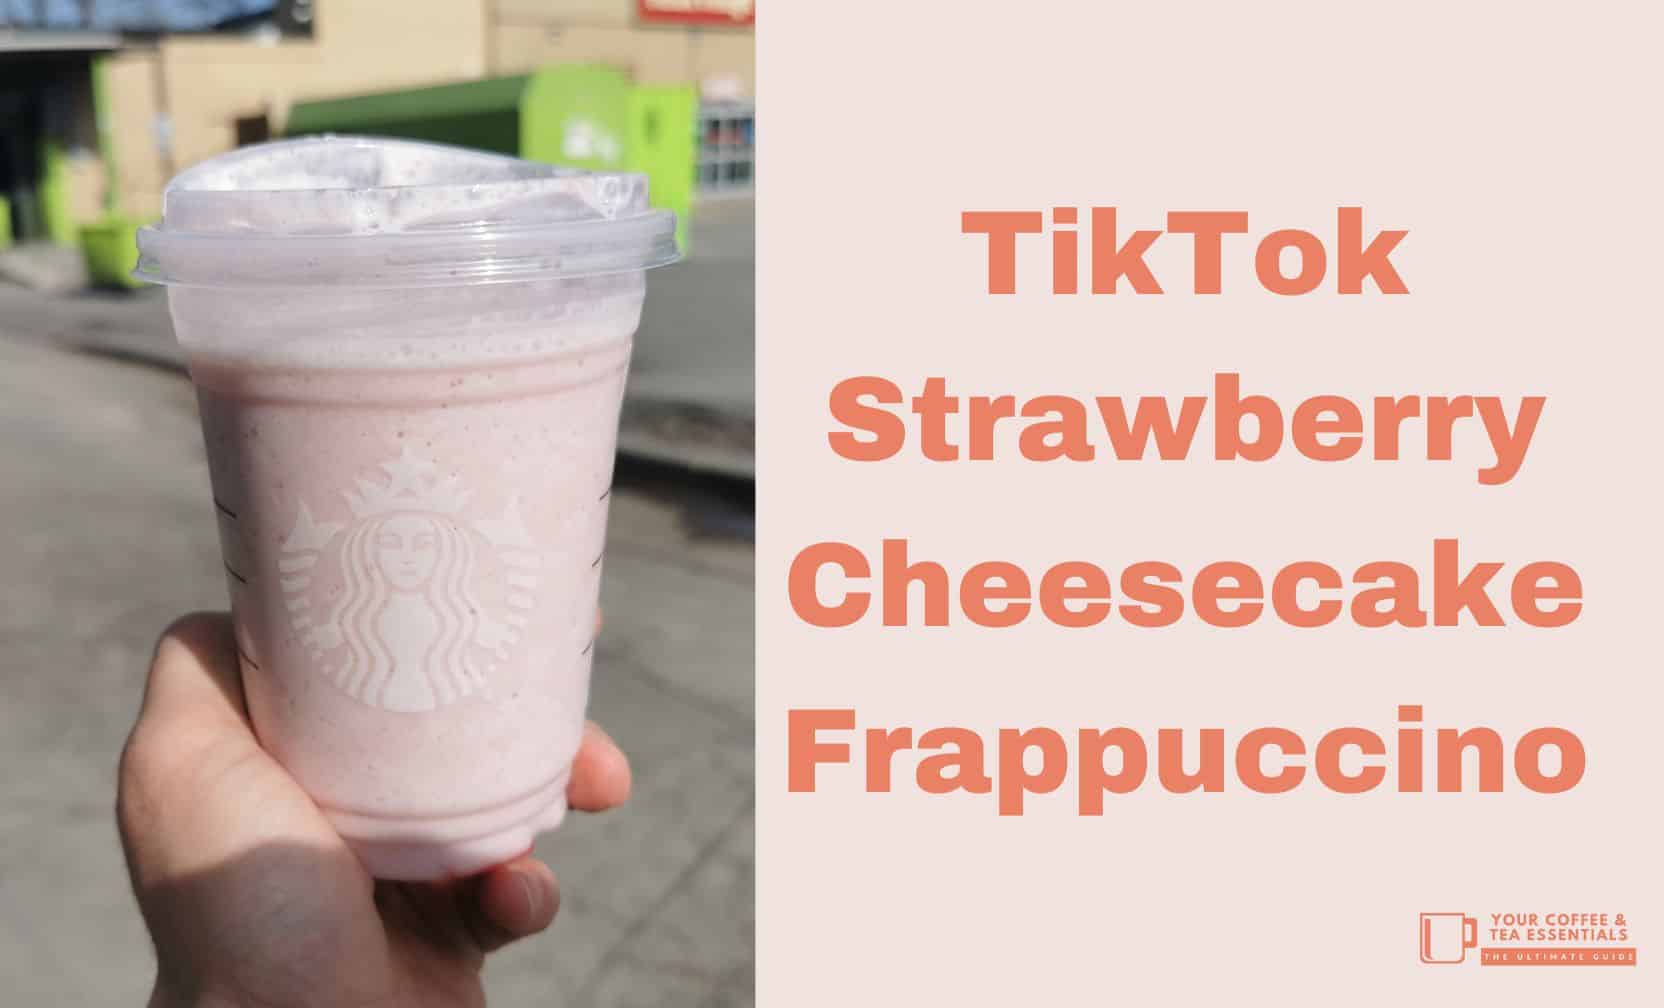 TikTok Strawberry Cheesecake Frappuccino